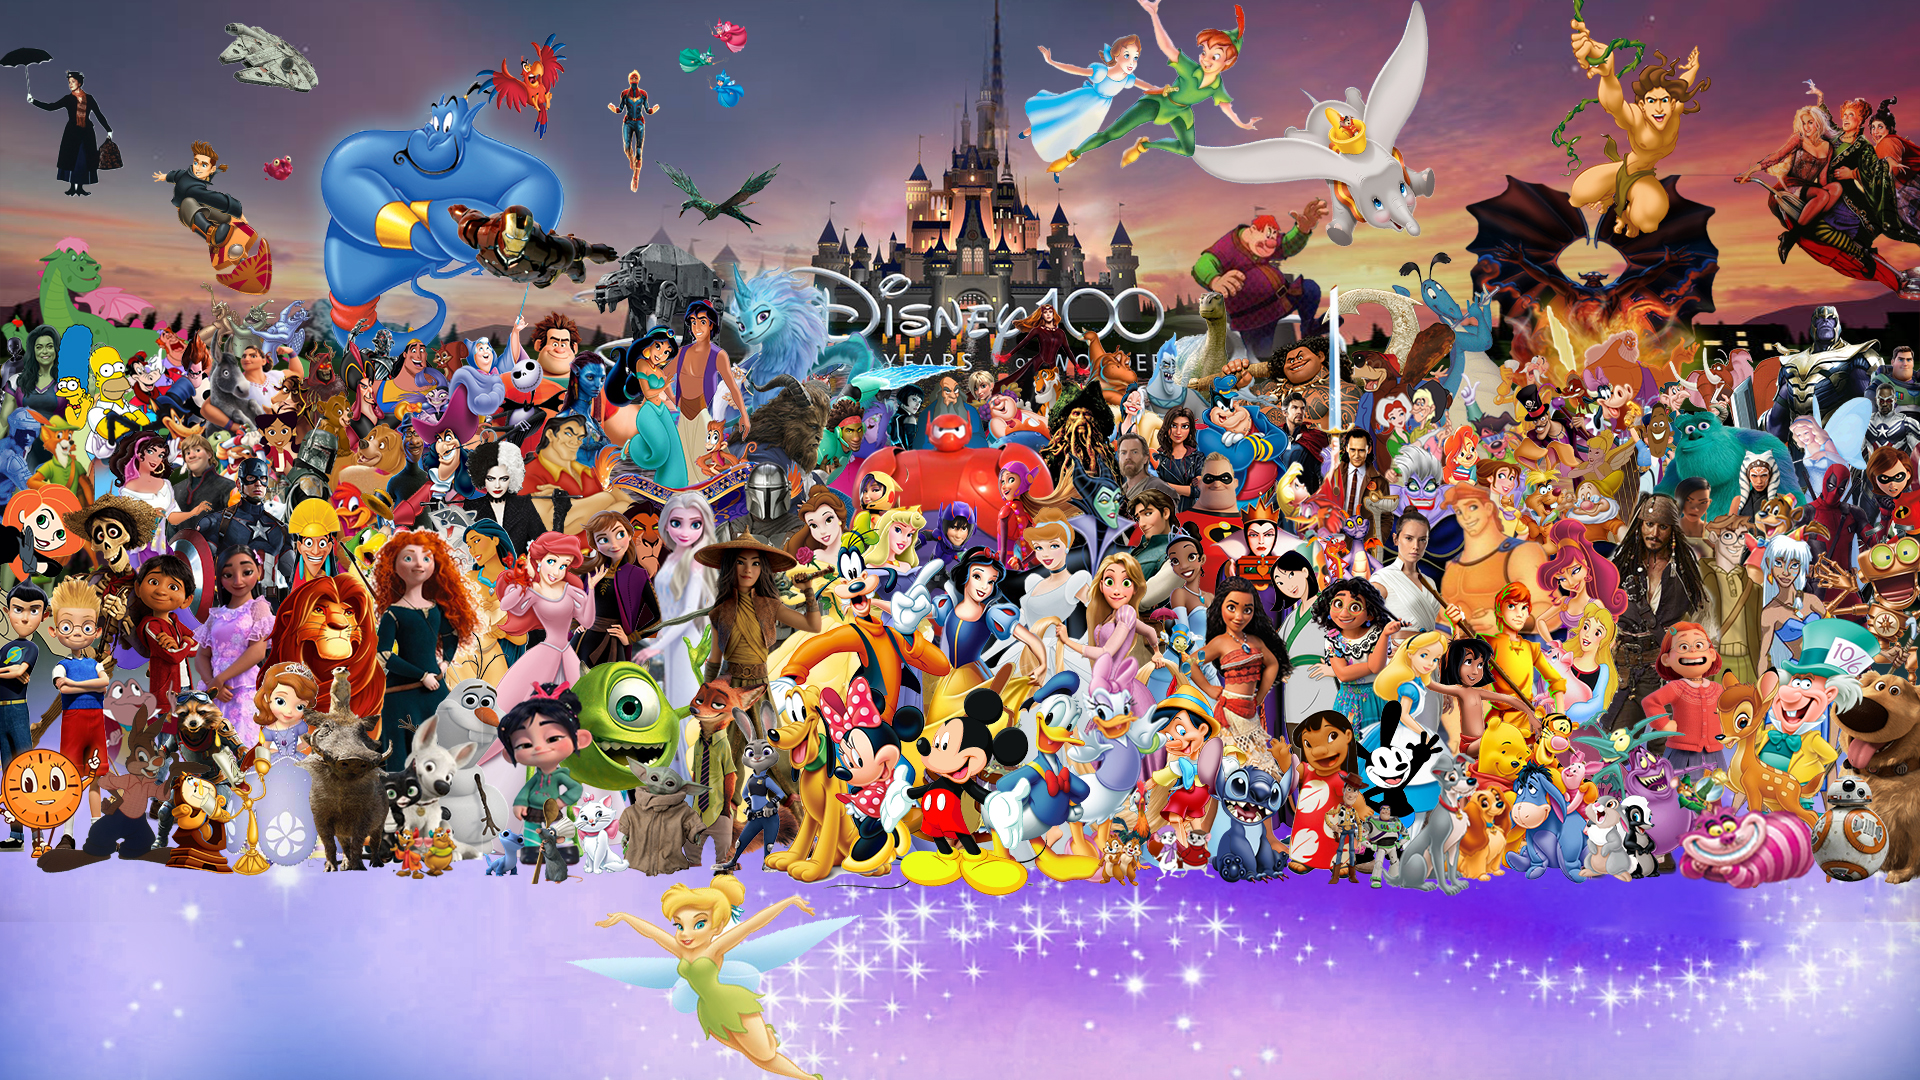 Disney Wallpaper | Disney 100 by Thekingblader995 on DeviantArt